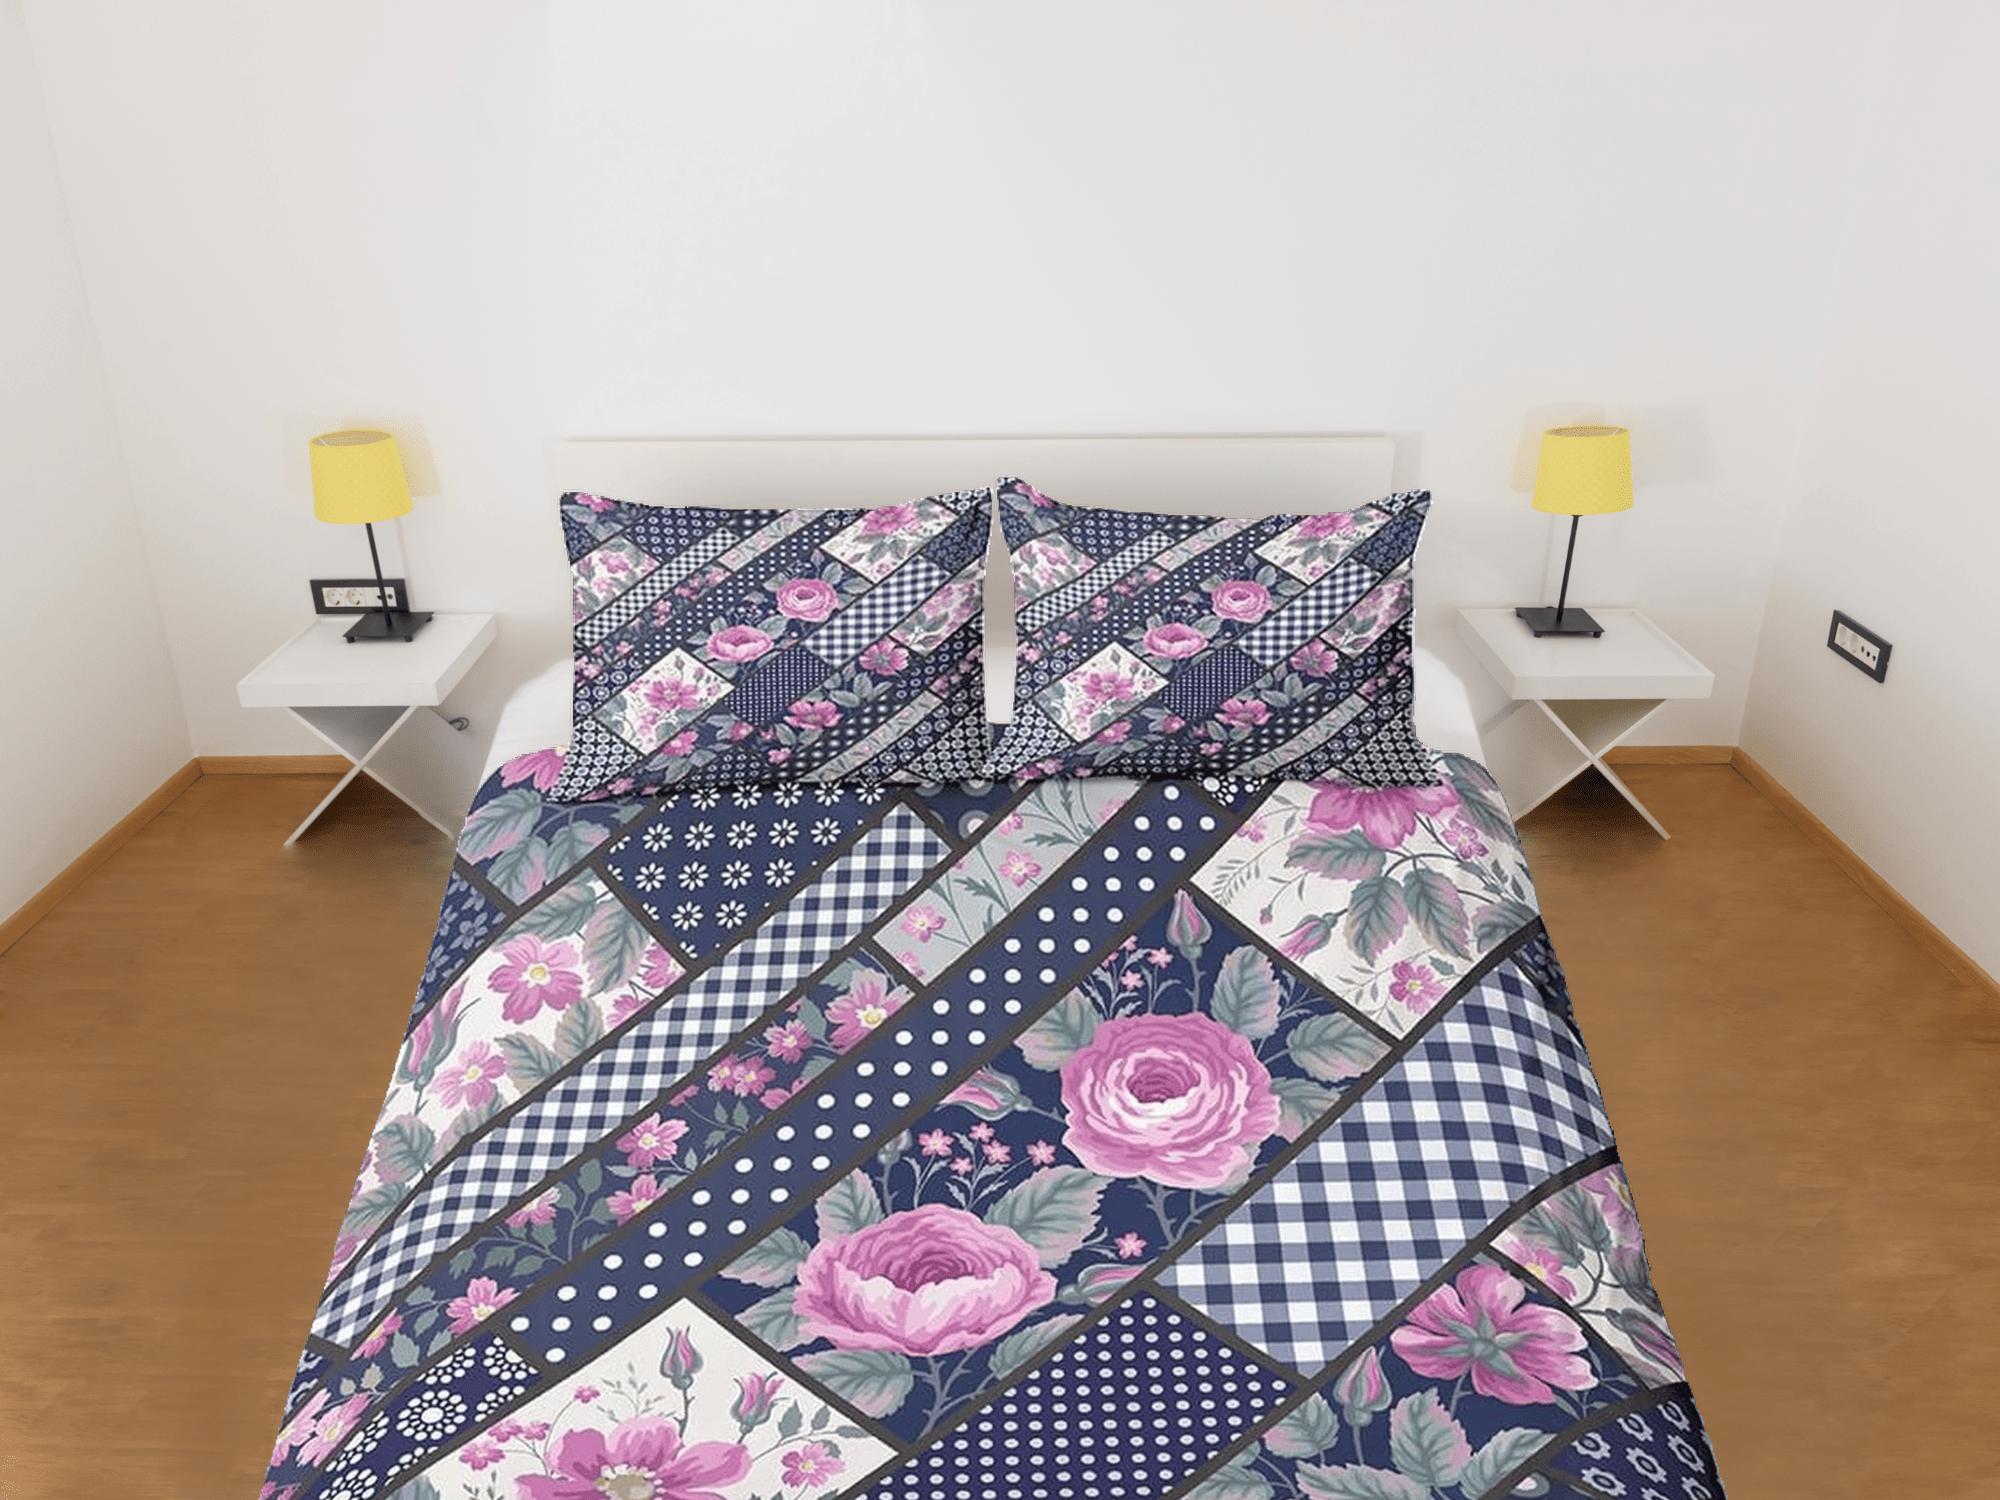 daintyduvet Polkadot pink floral patchwork quilt printed duvet cover set, aesthetic decor bedding set full, king, queen size, boho bedspread shabby chic